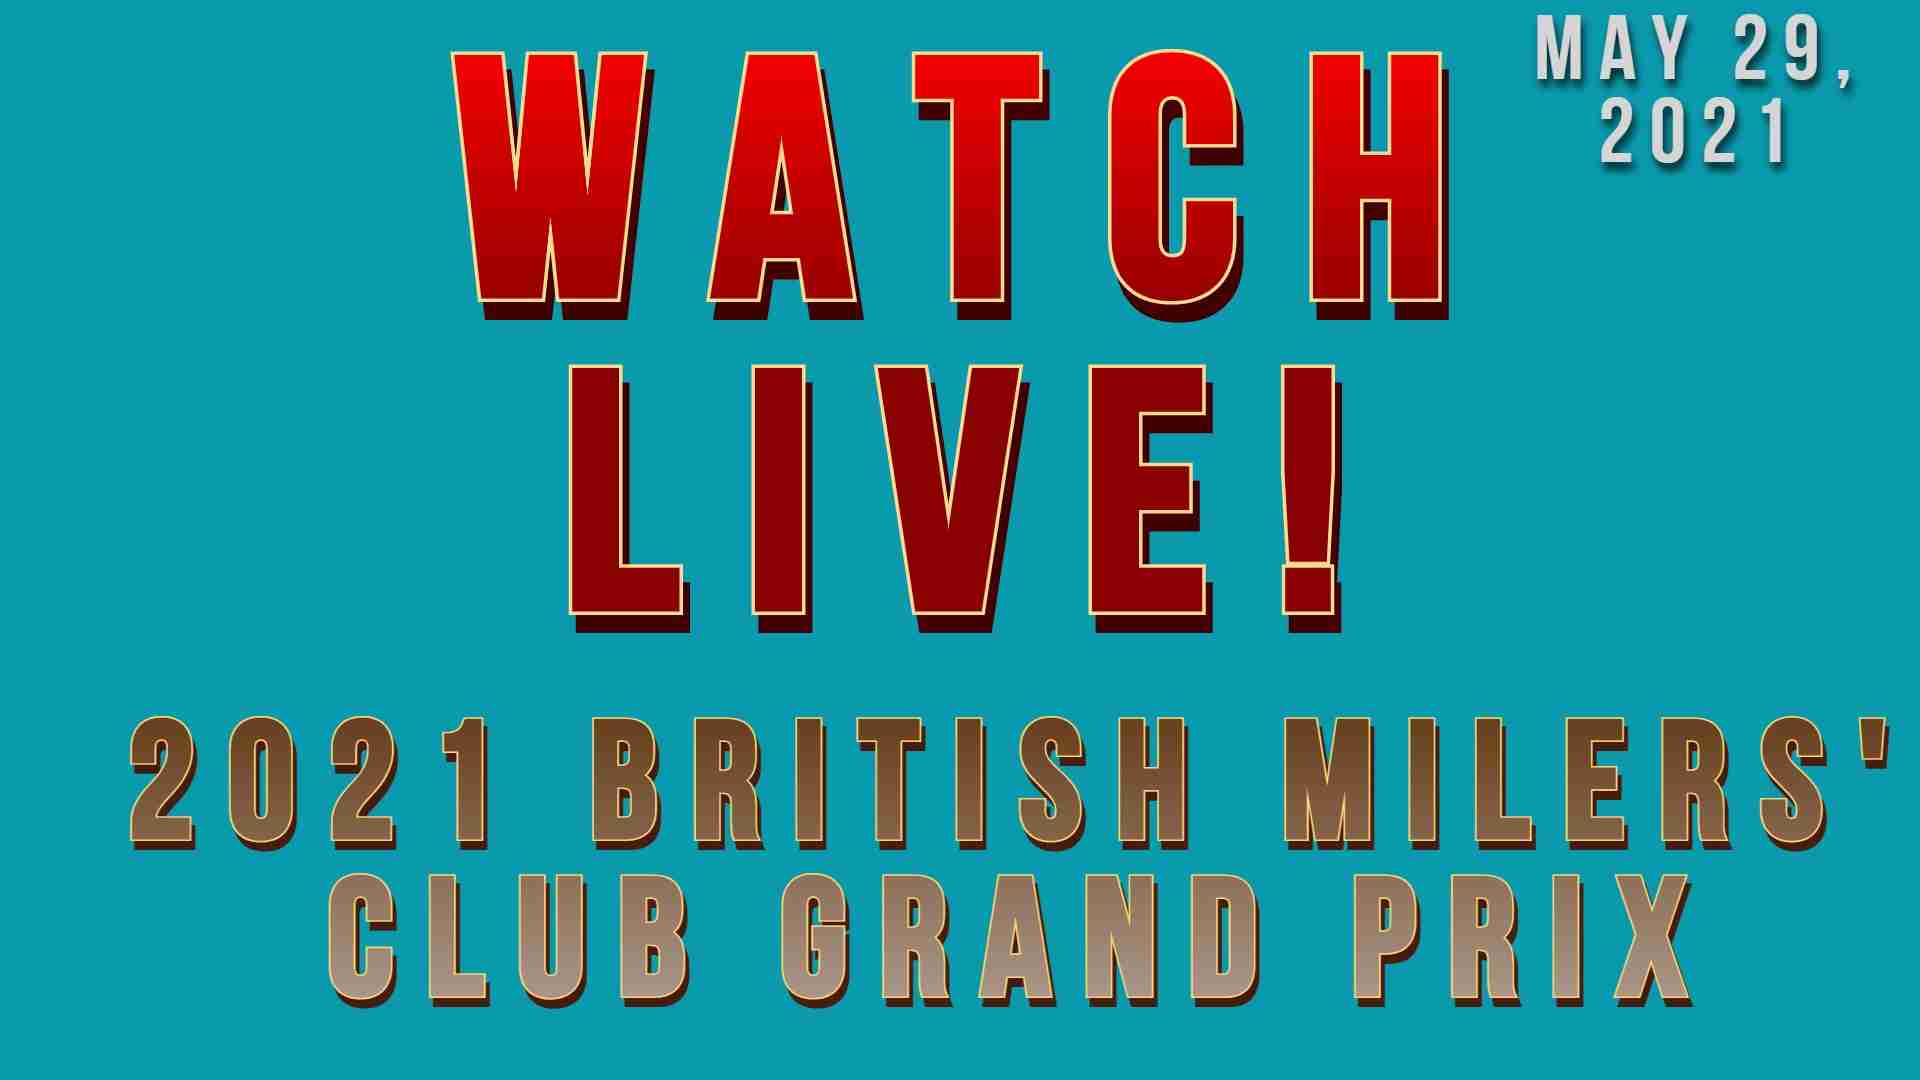 How to watch, follow 2021 British milers’ club grand prix